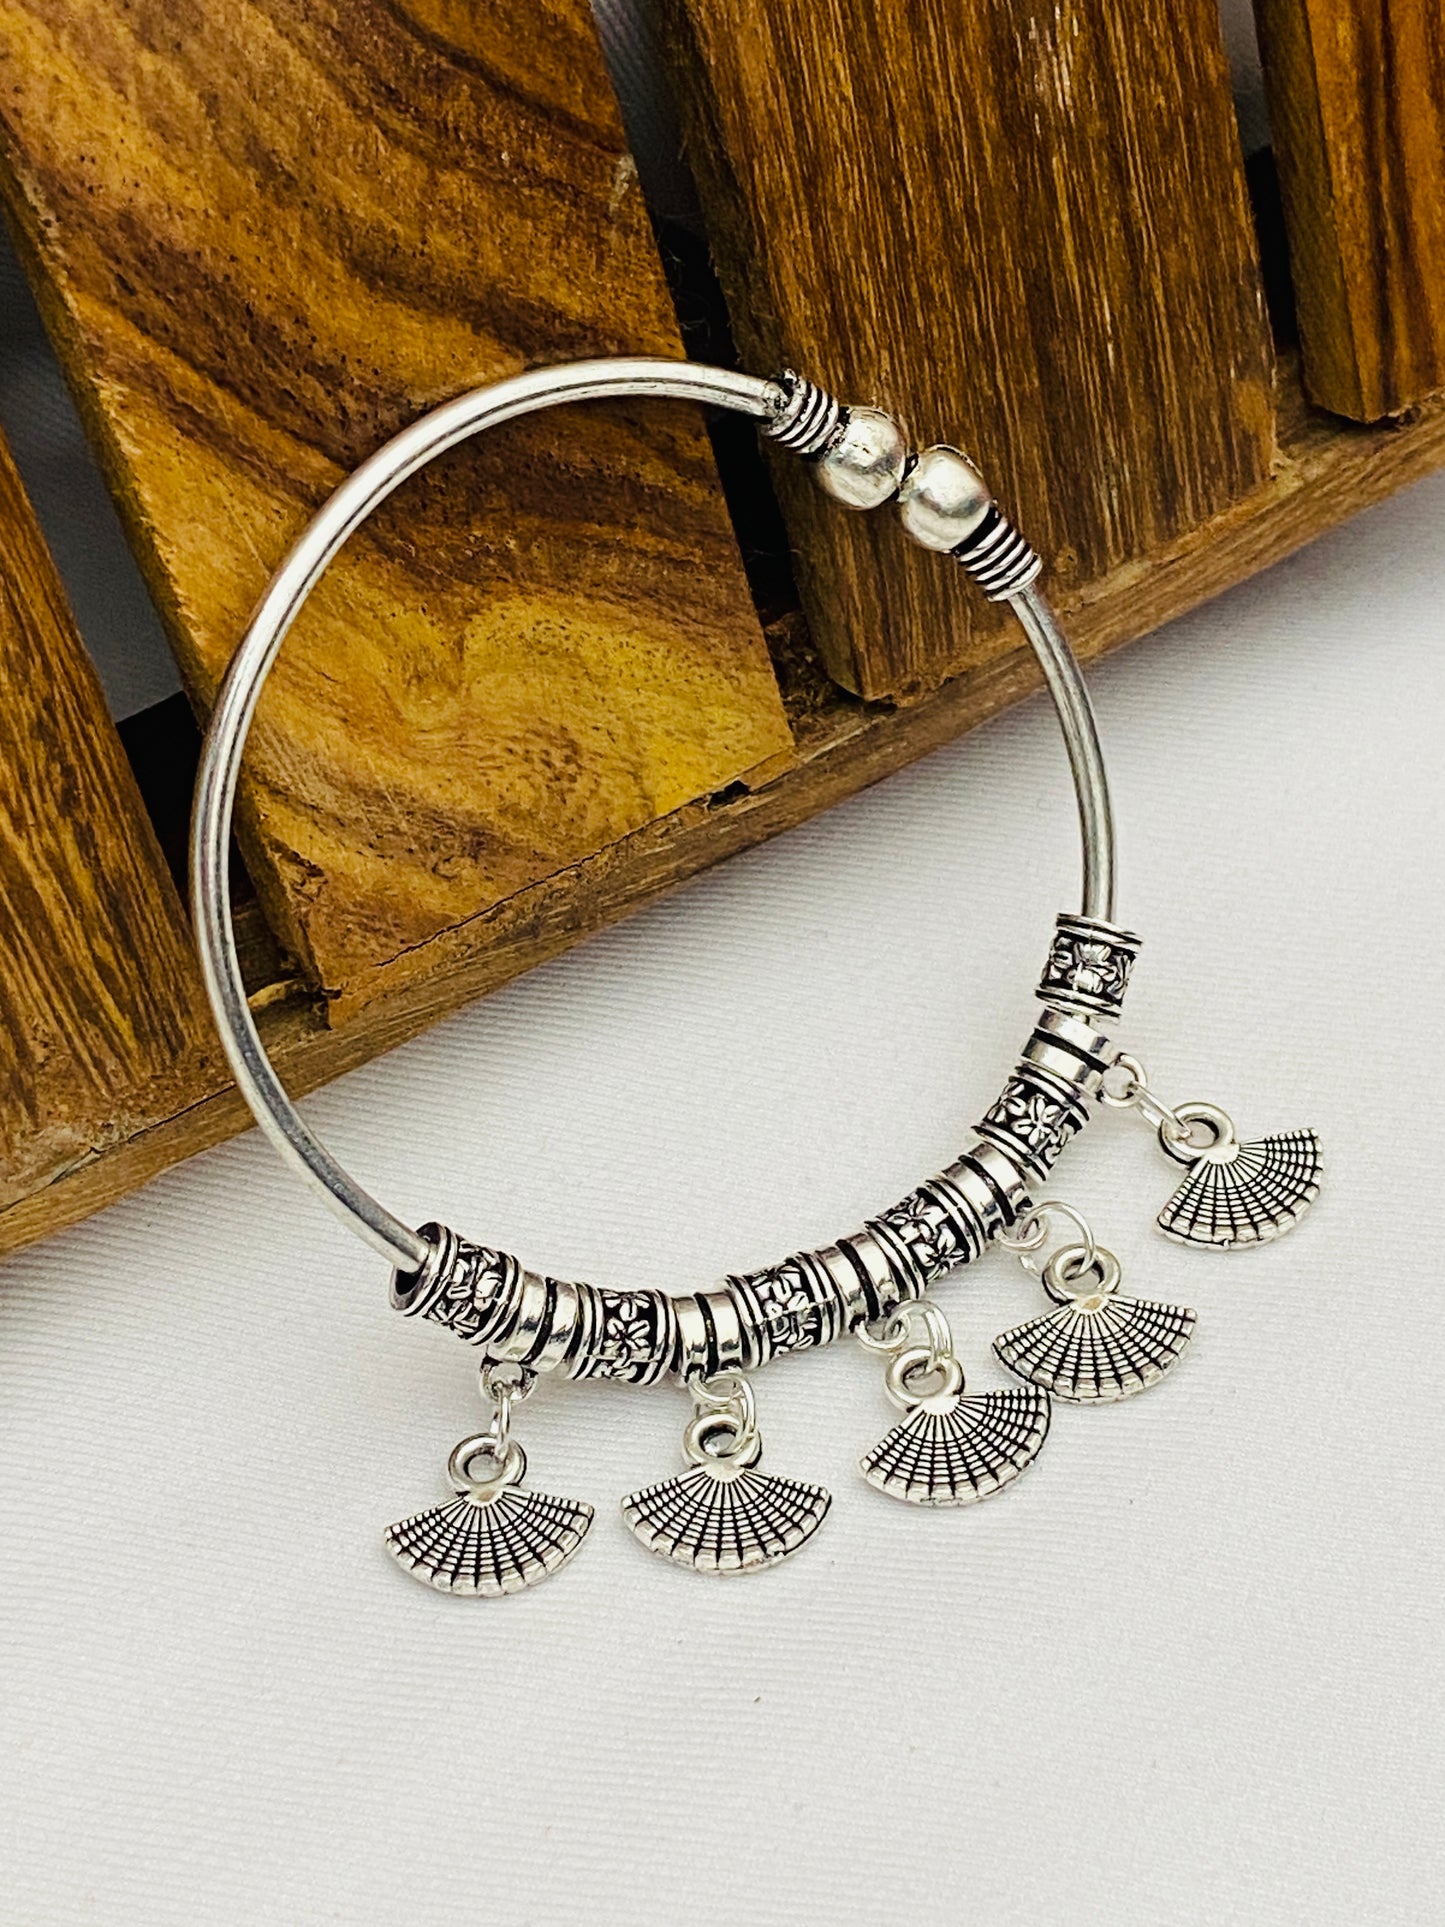 Elegant Design Silver Oxidized Bracelet With Gorgeous Hangings